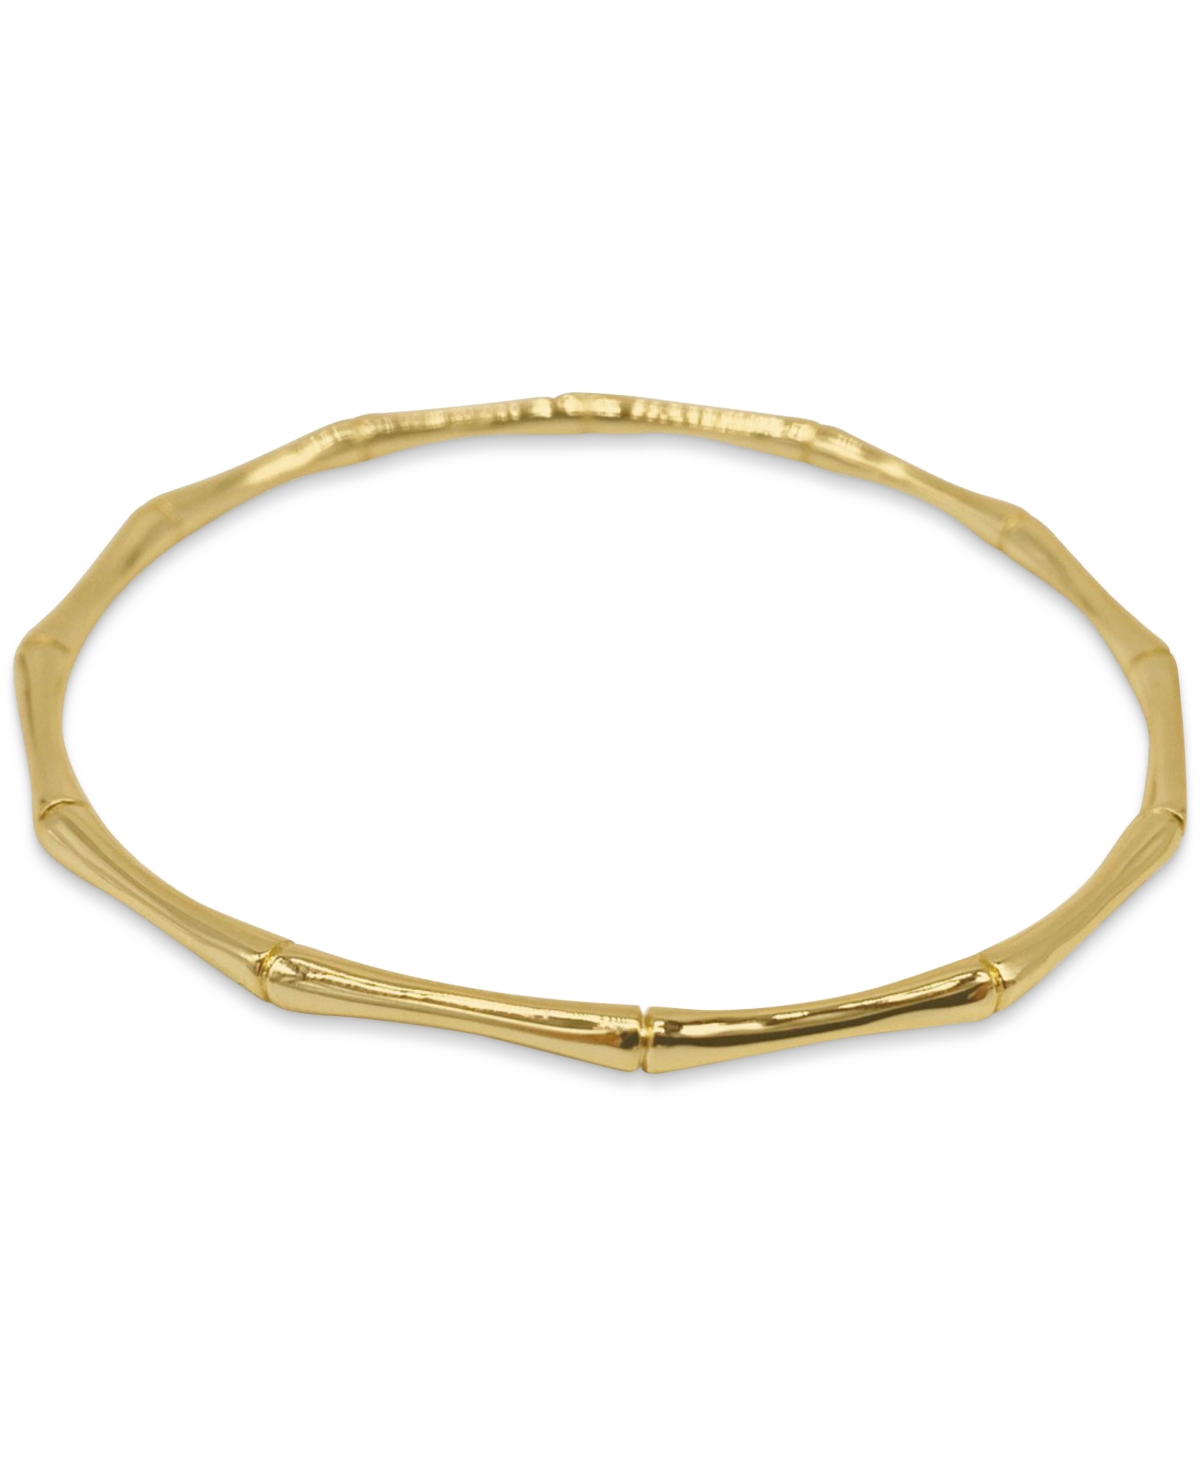 Adornia 14k Gold-plated Bamboo-look Bangle Bracelet